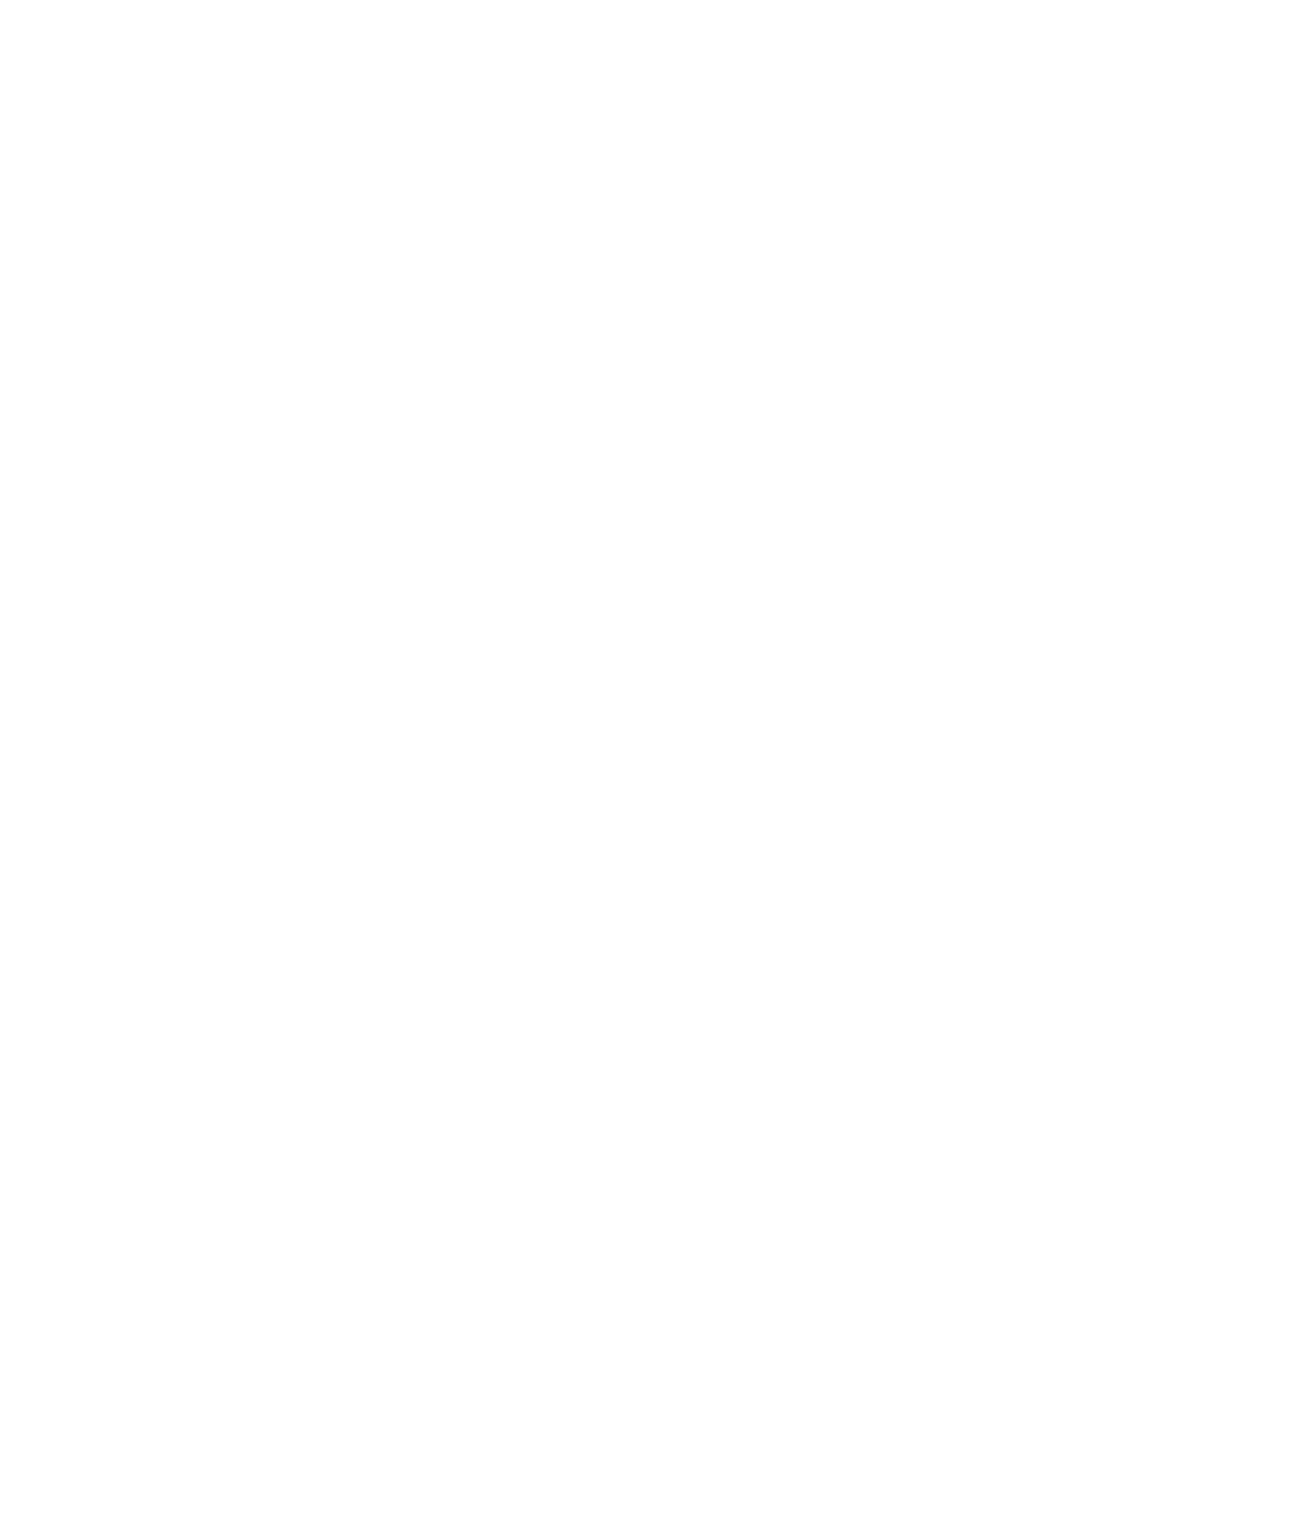 Capri Holdings logo for dark backgrounds (transparent PNG)